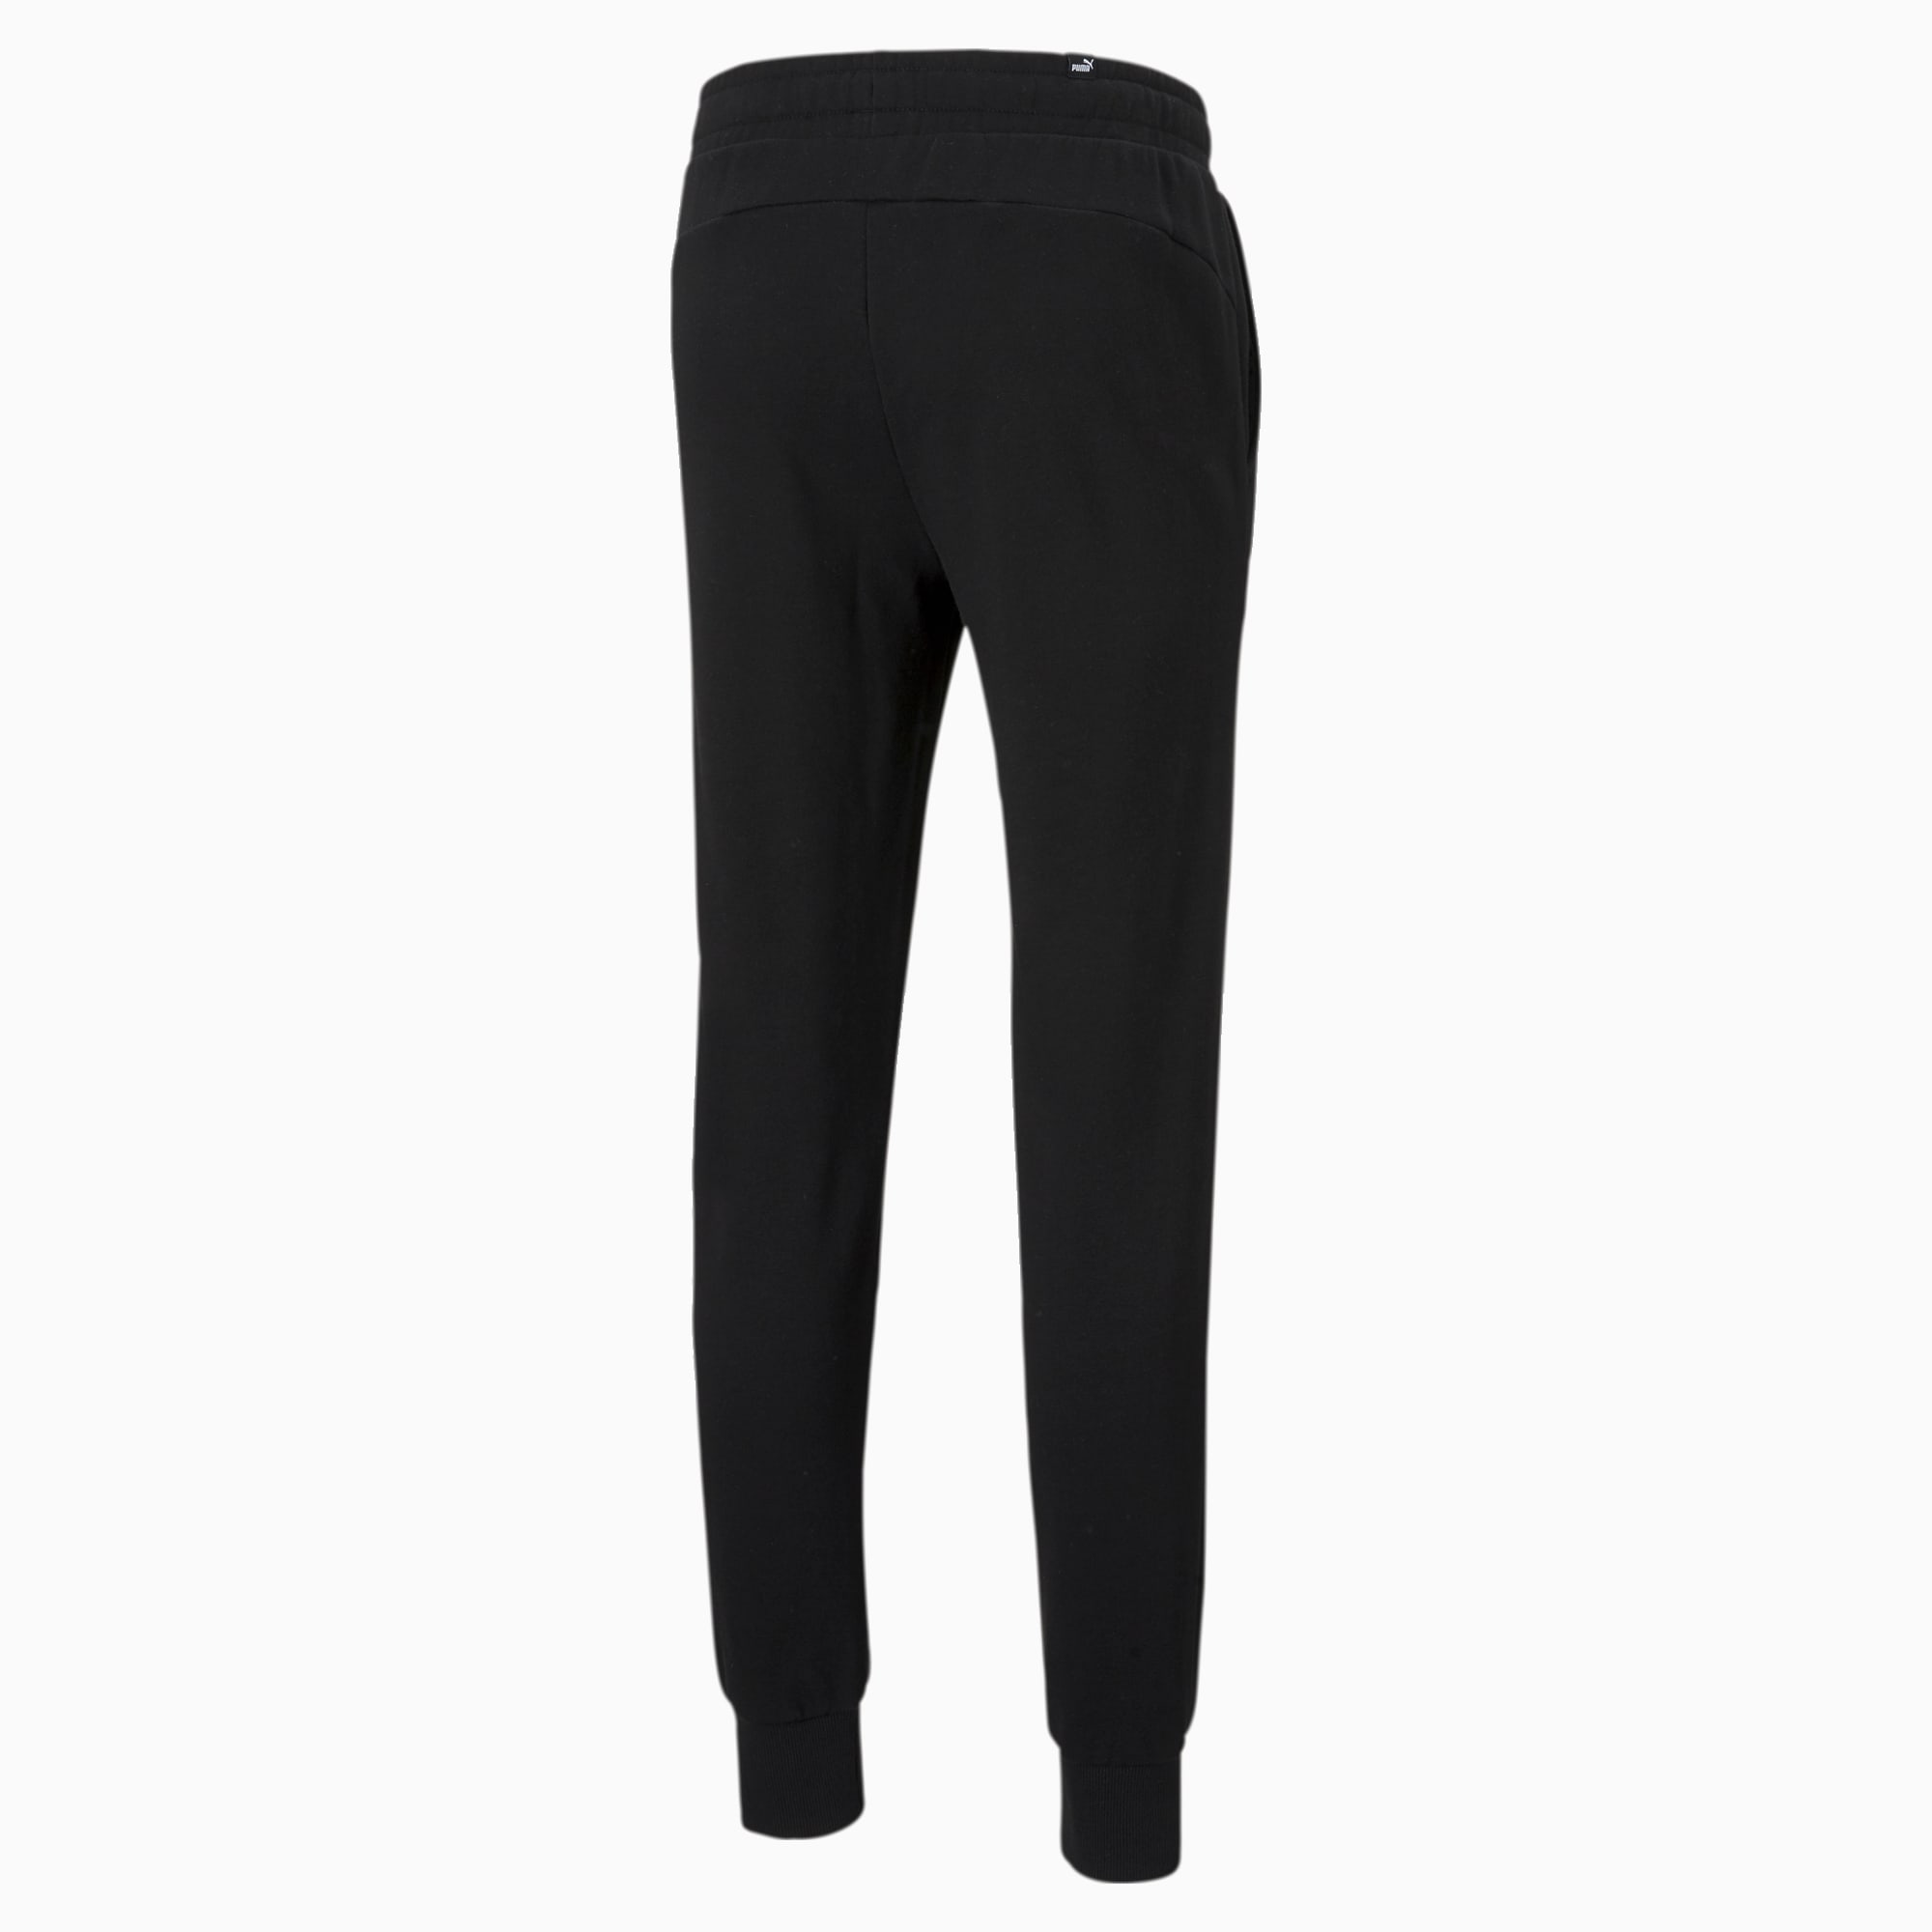 PUMA Essentials Slim Men's Pants, Black, Size L, Clothing